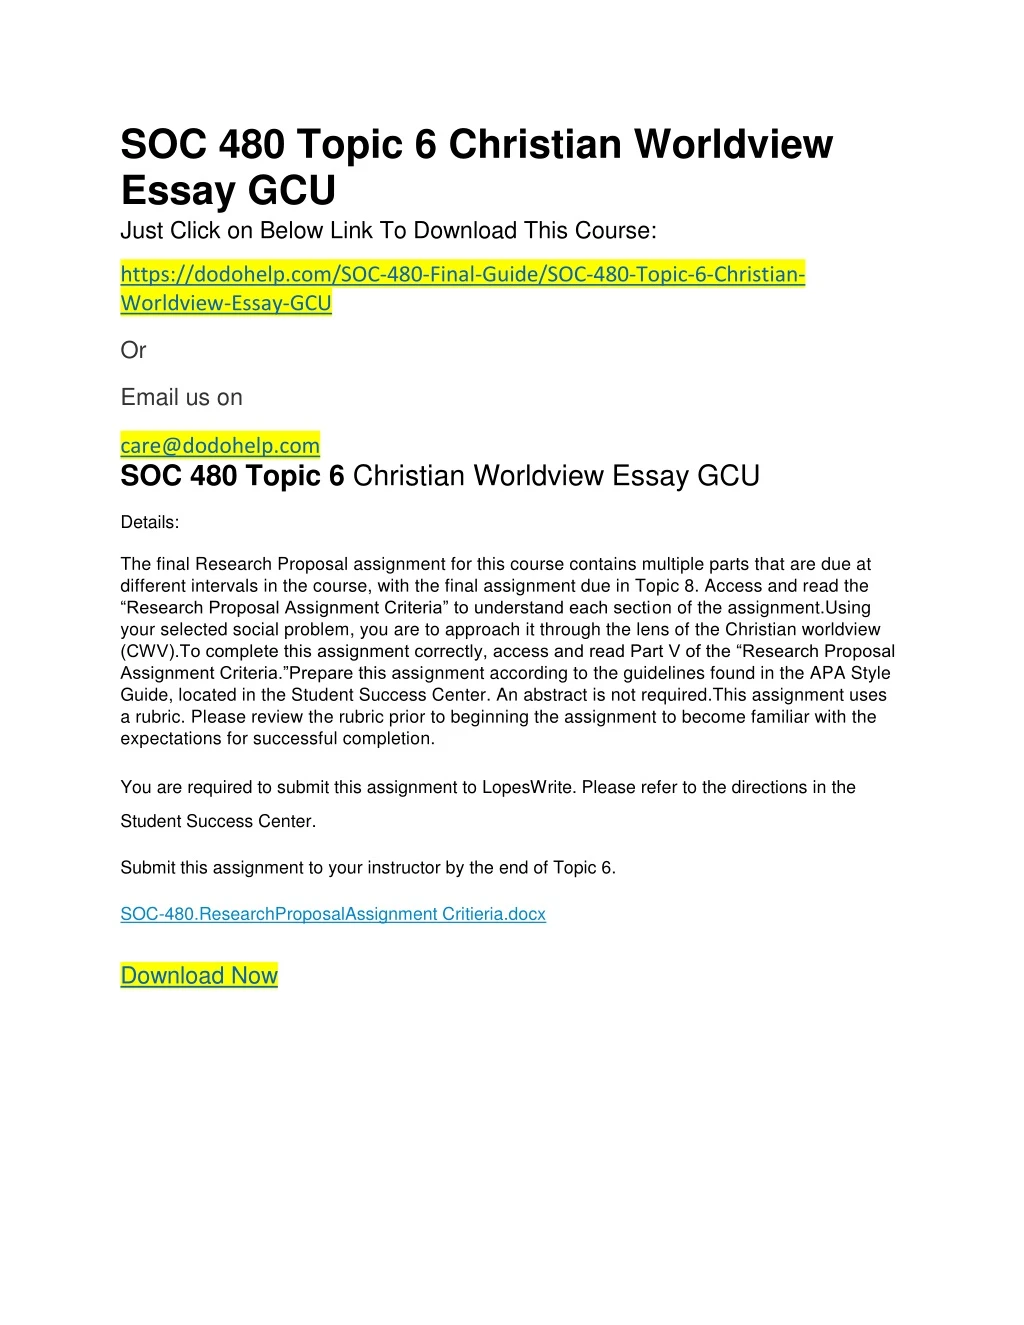 christian worldview essay